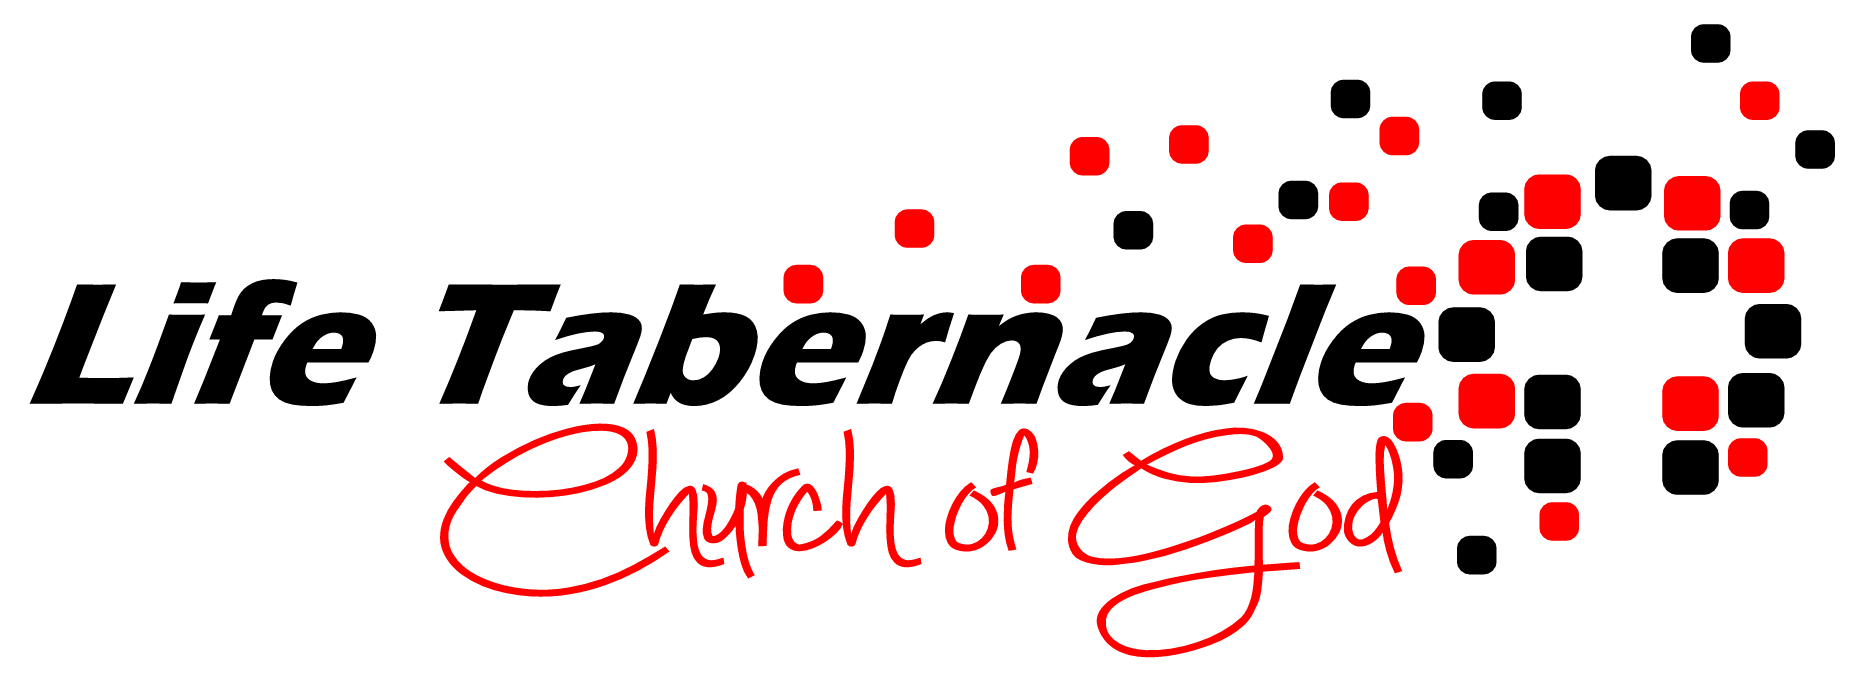 Life Tabernacle Church of God